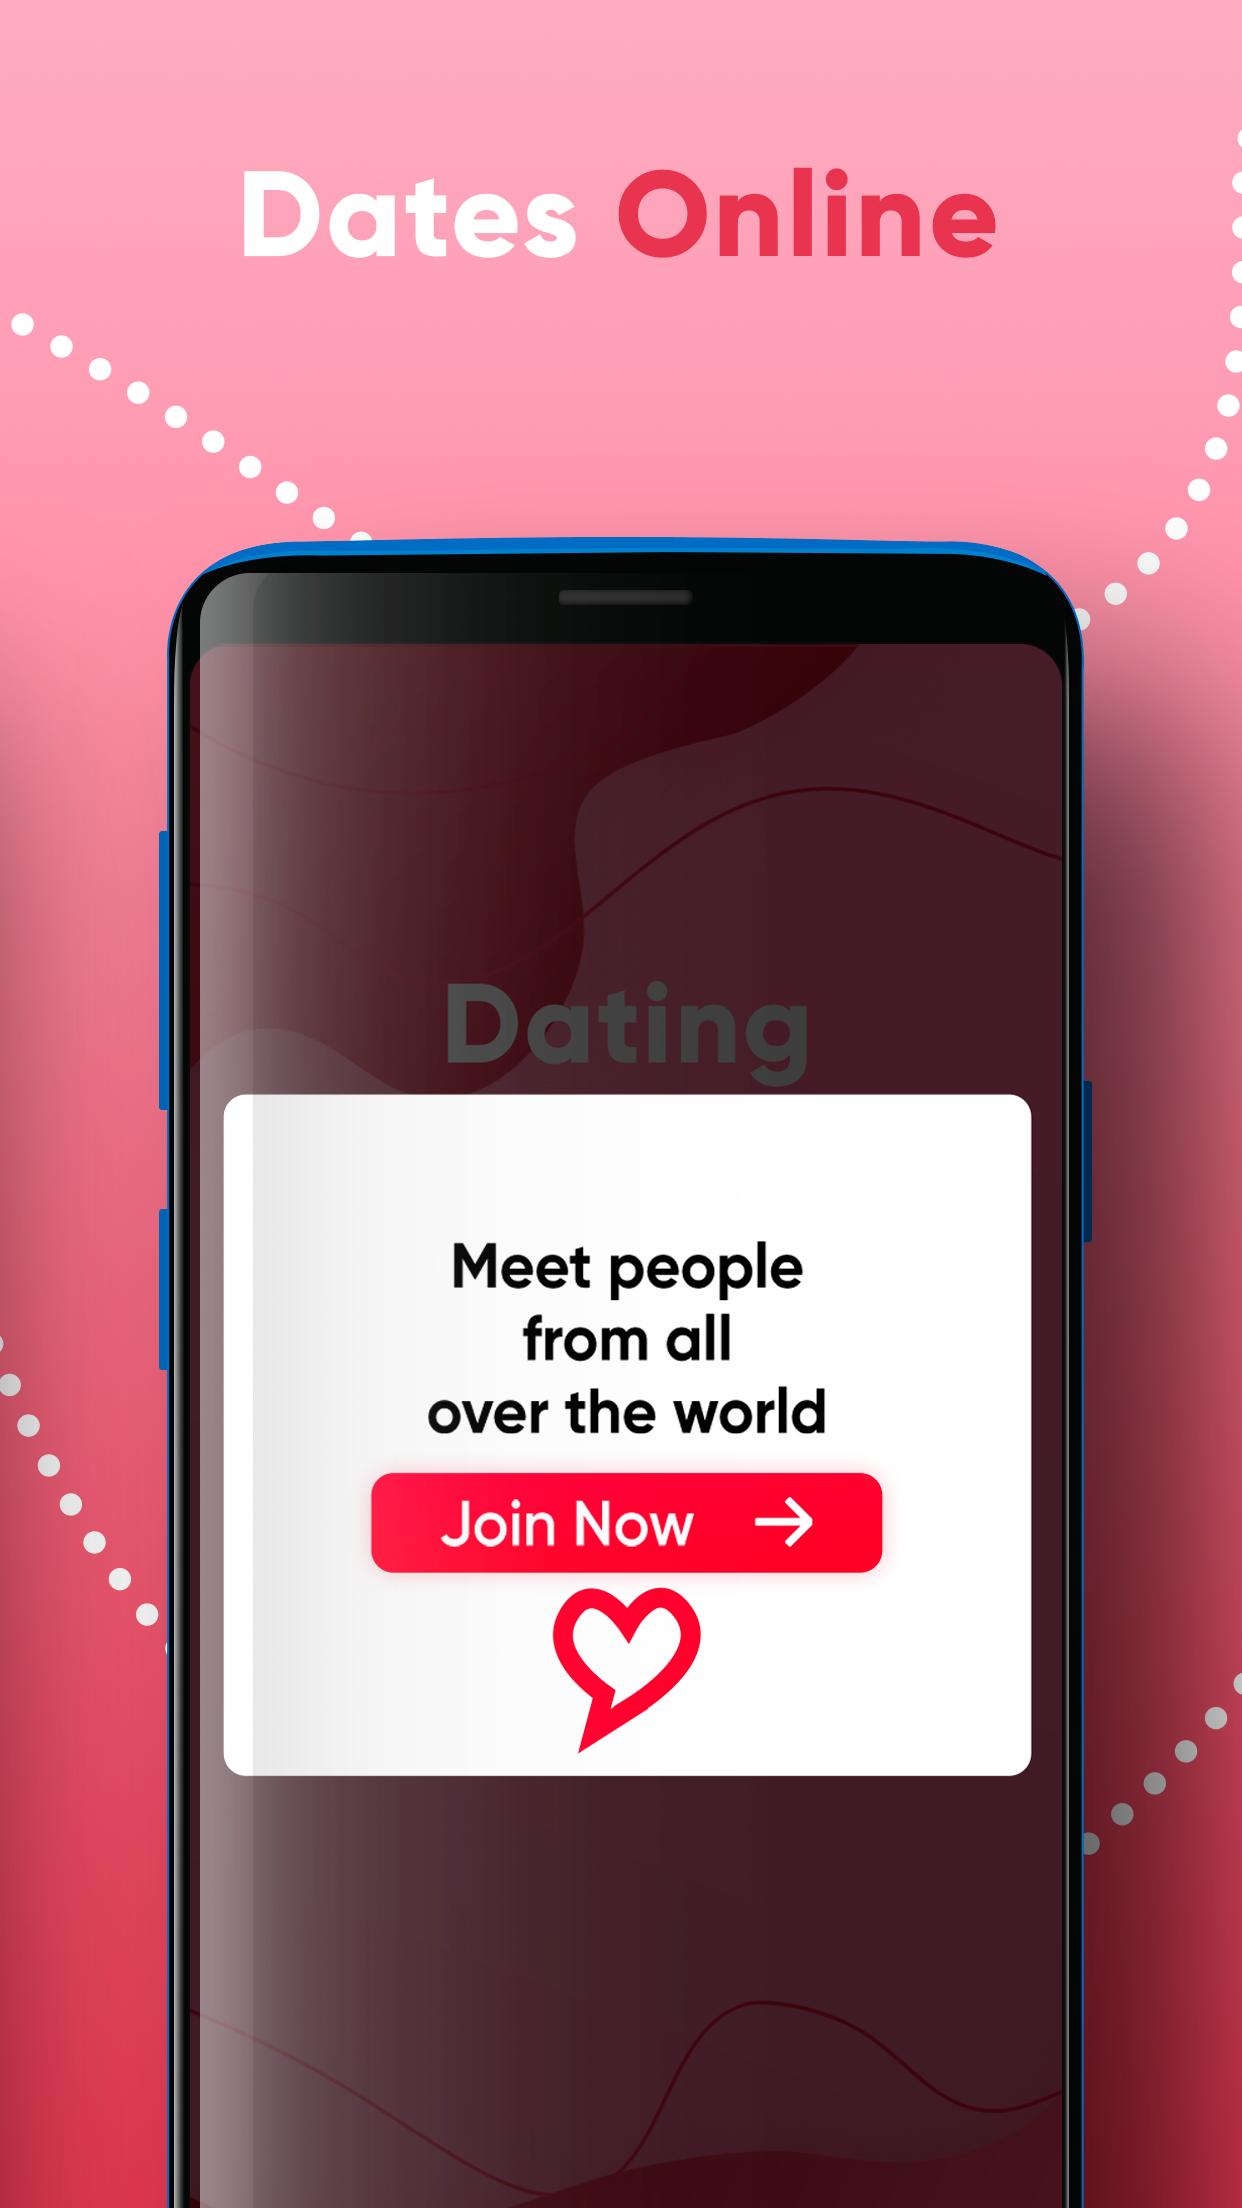 Dating Online App - Find Dates 2.0 Screenshot 4